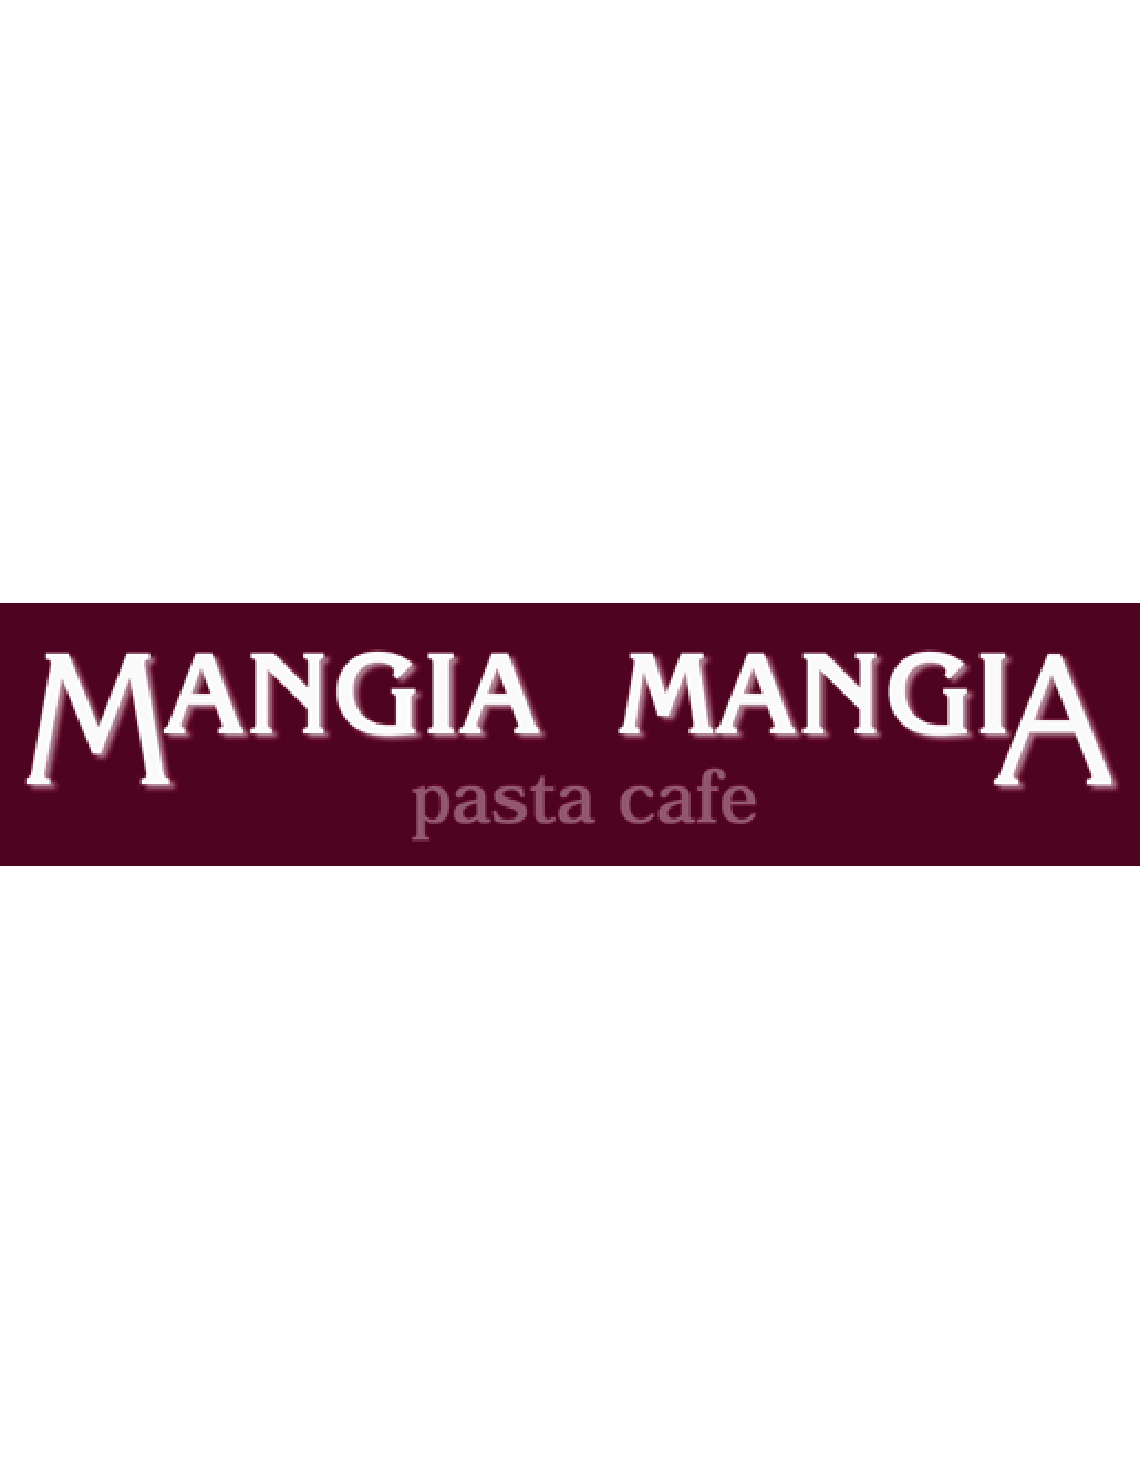 Mangia Mangia logo